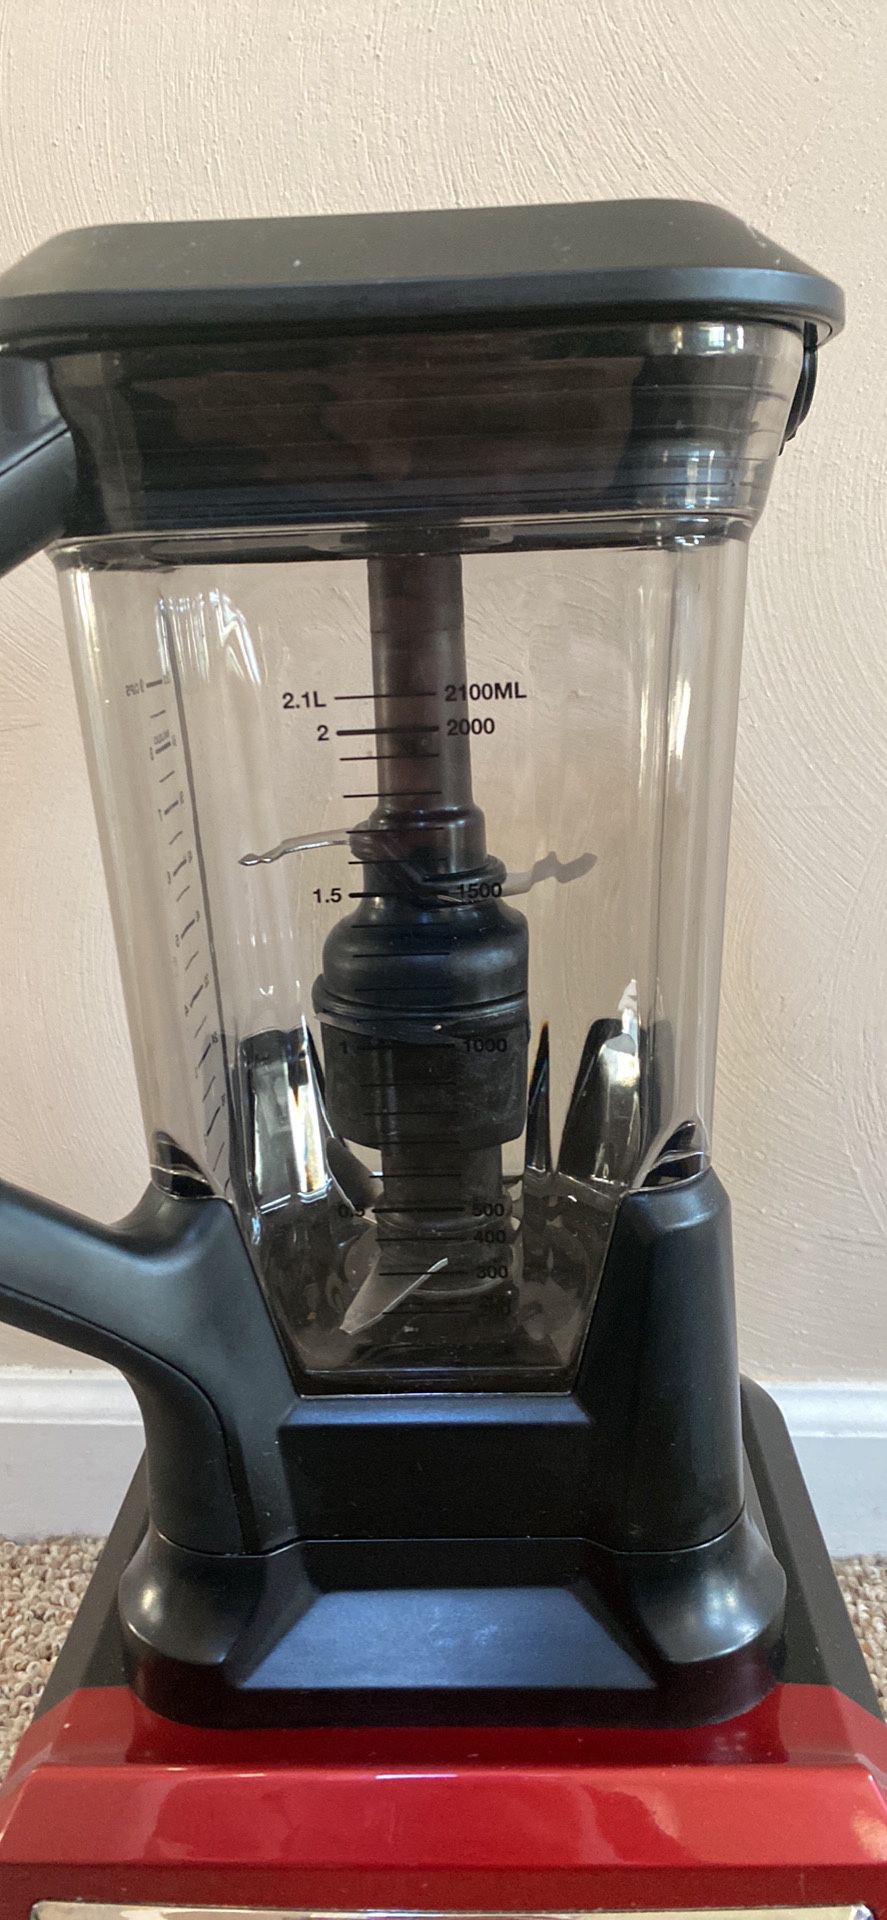 Ninja Professional 1500 Watt Blender for Sale in Tumwater, WA - OfferUp